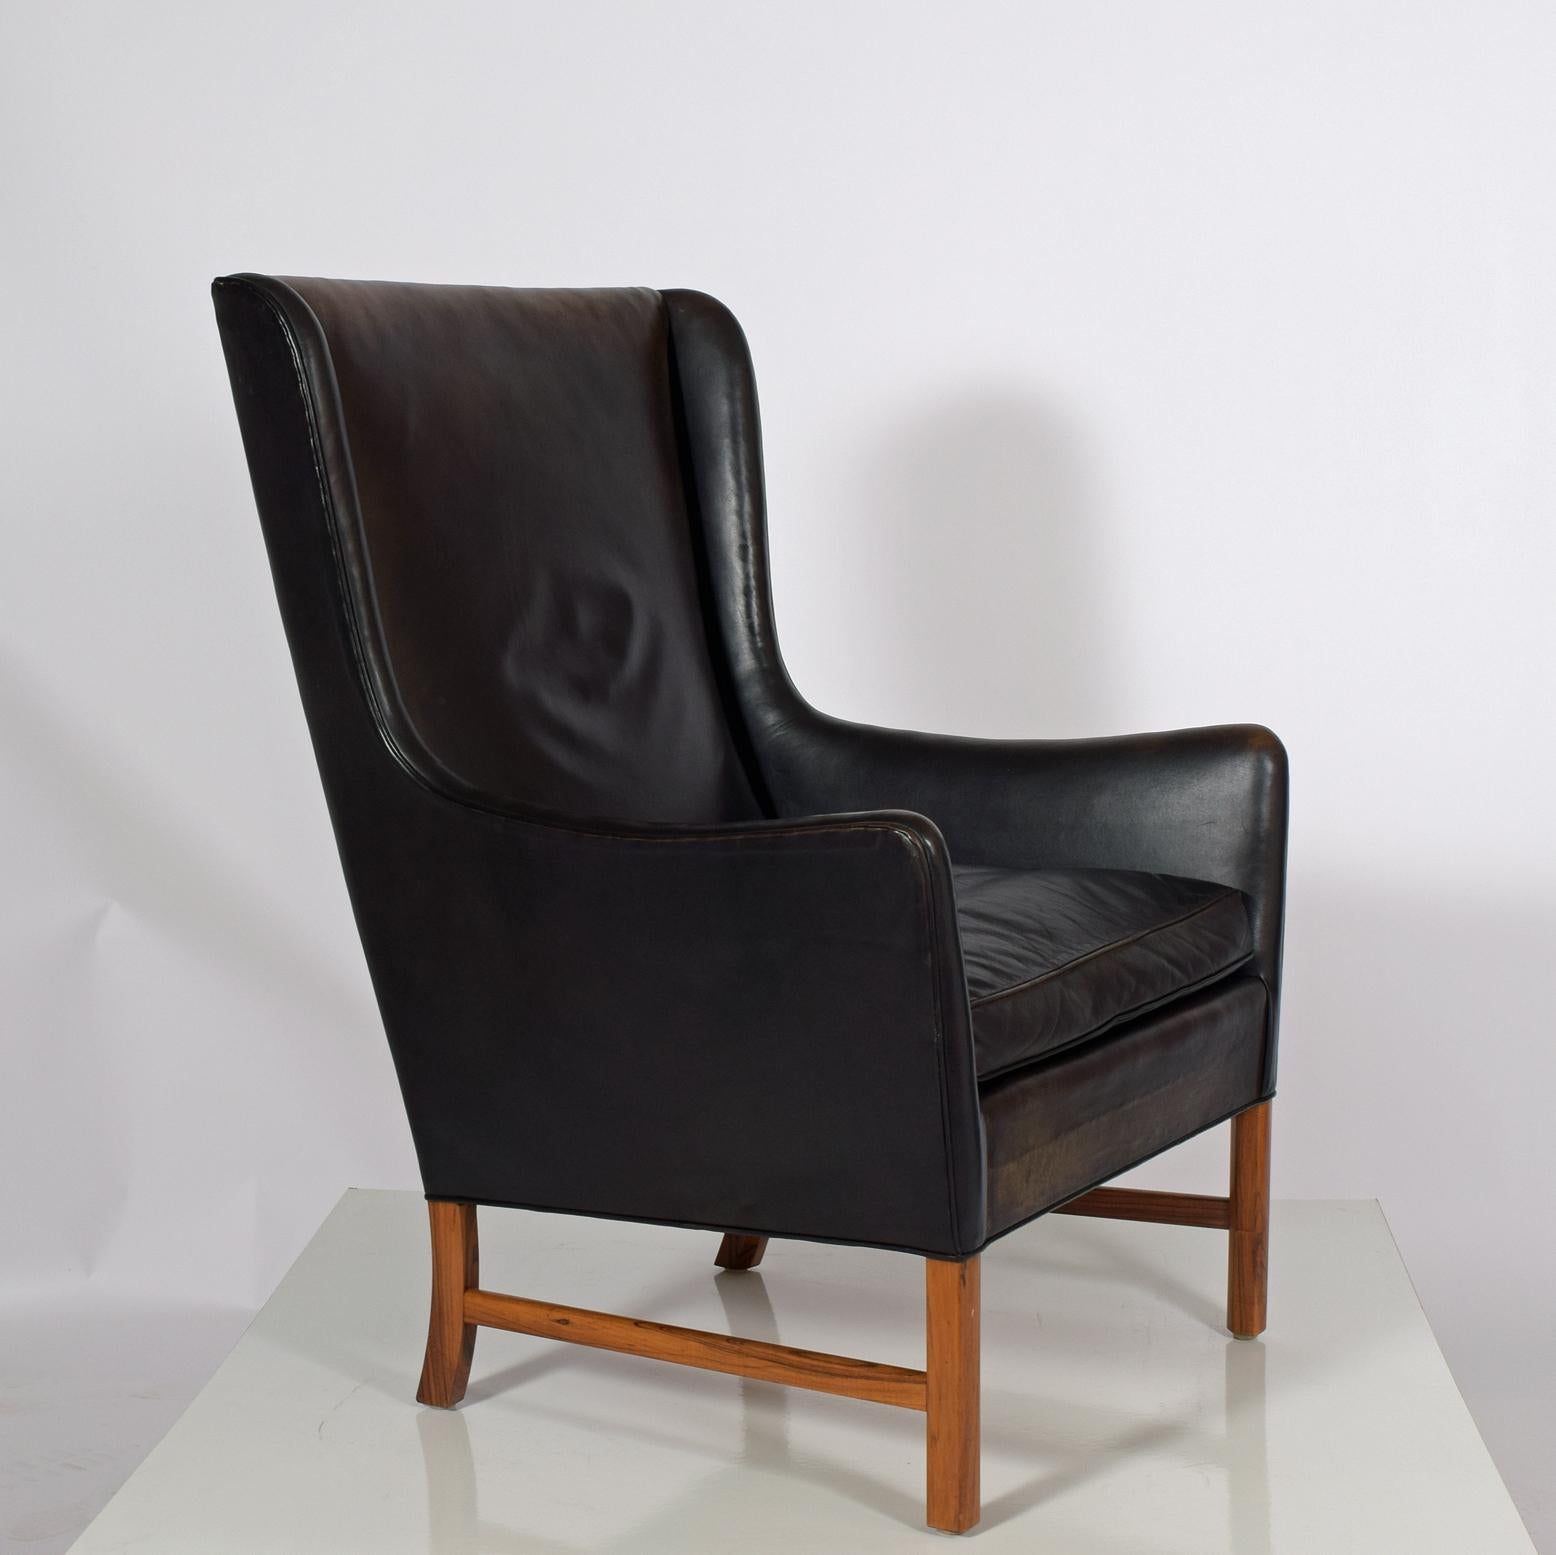 Black leather Brazilian rosewood, elegant armchair design by Ole Wanscher for A.J. Iversen original leather.